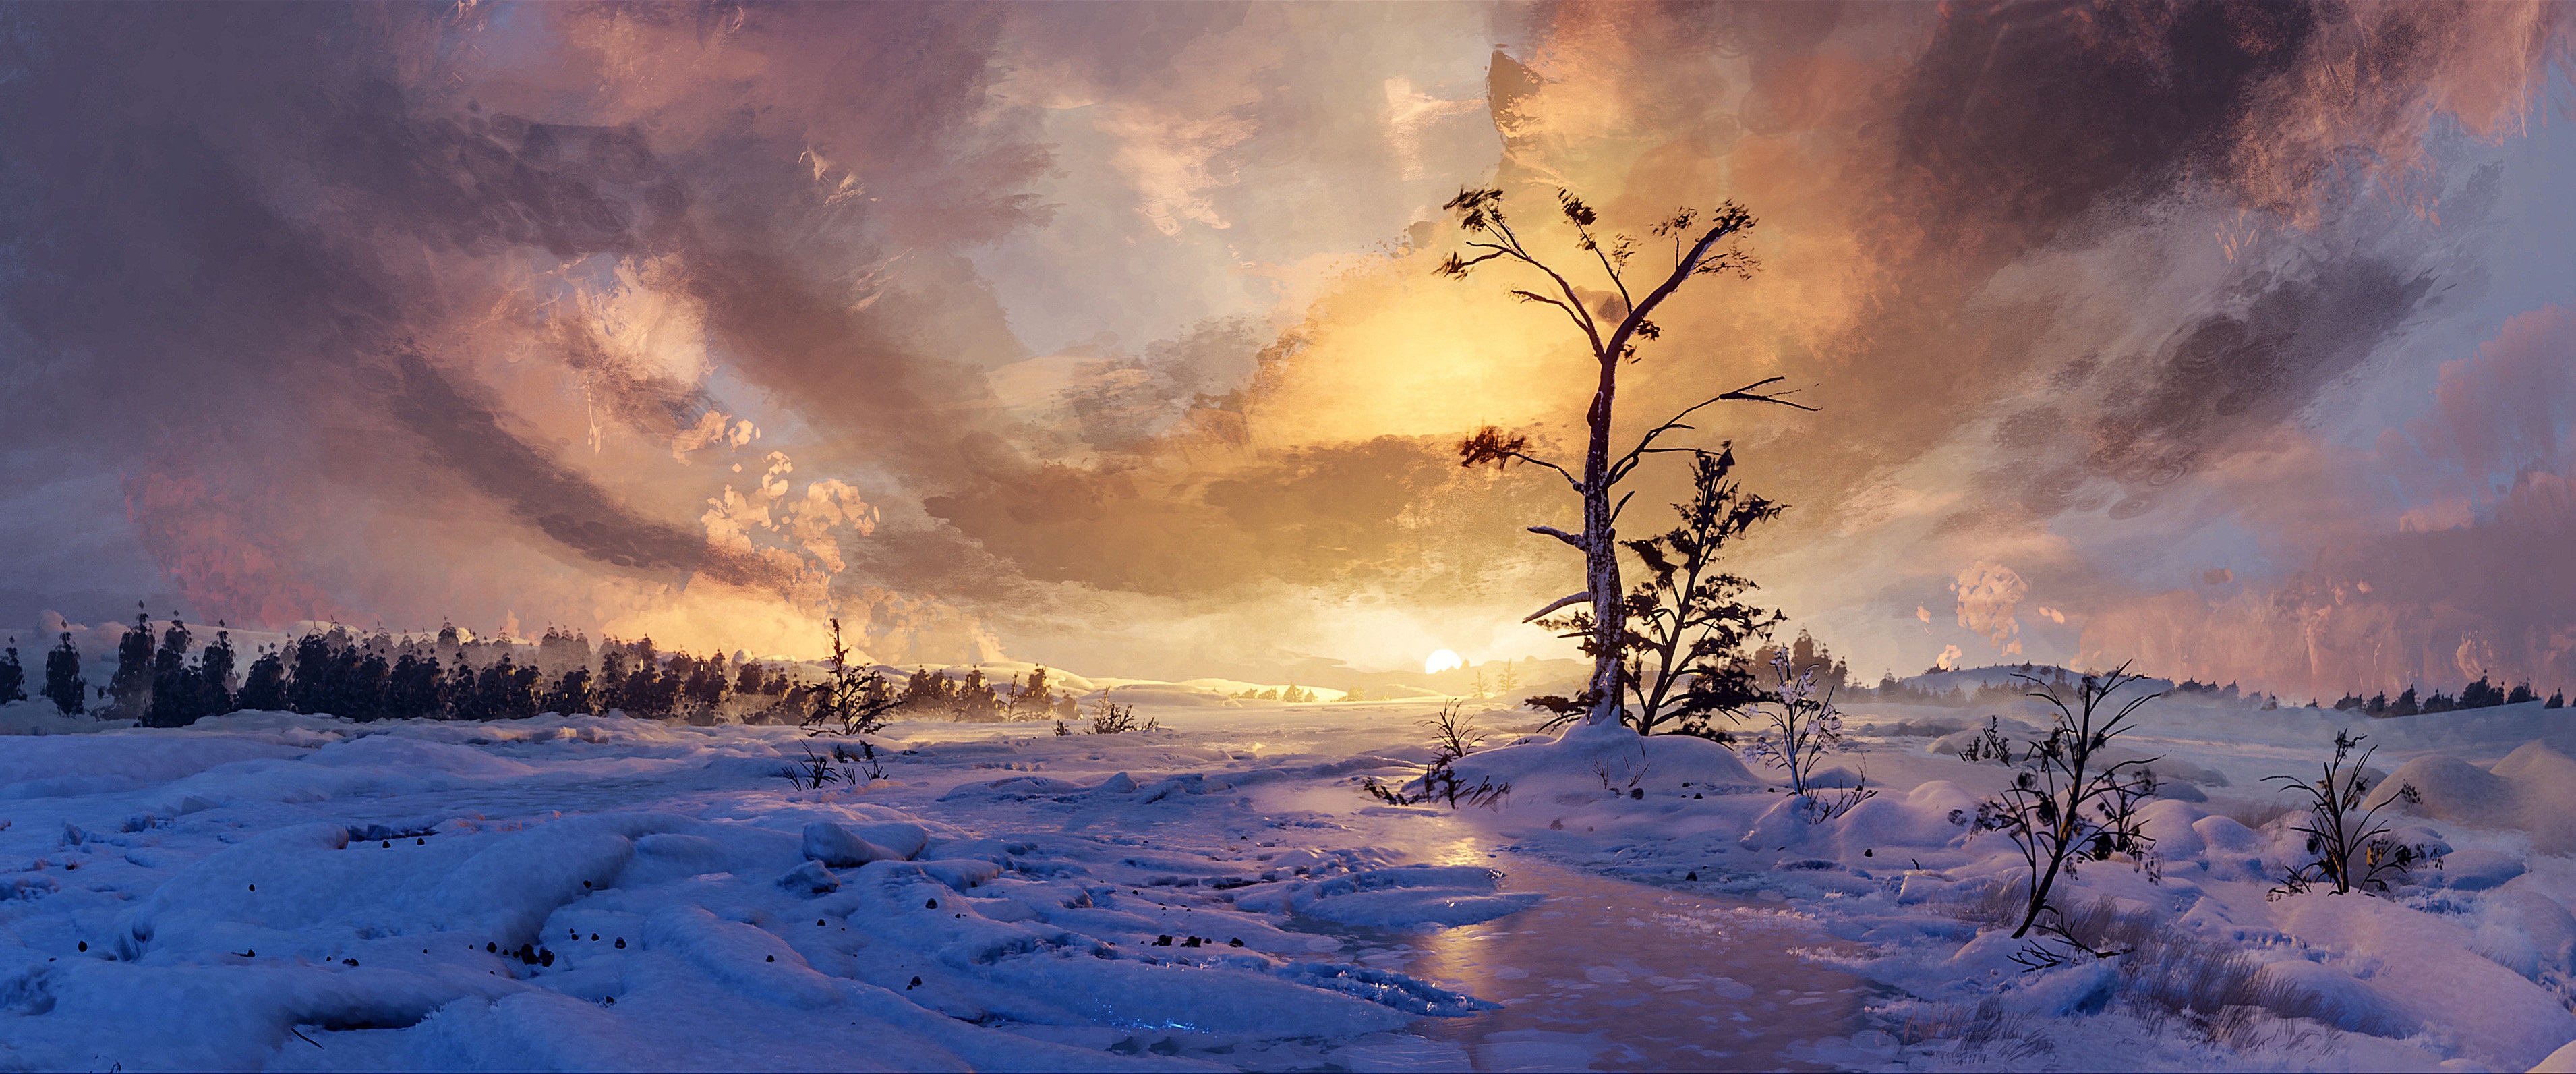 Landscape Winter Snow Trees Frozen River Snow Covered Sunset Sun Sky Nature Artwork Fantastic Realis 3820x1592